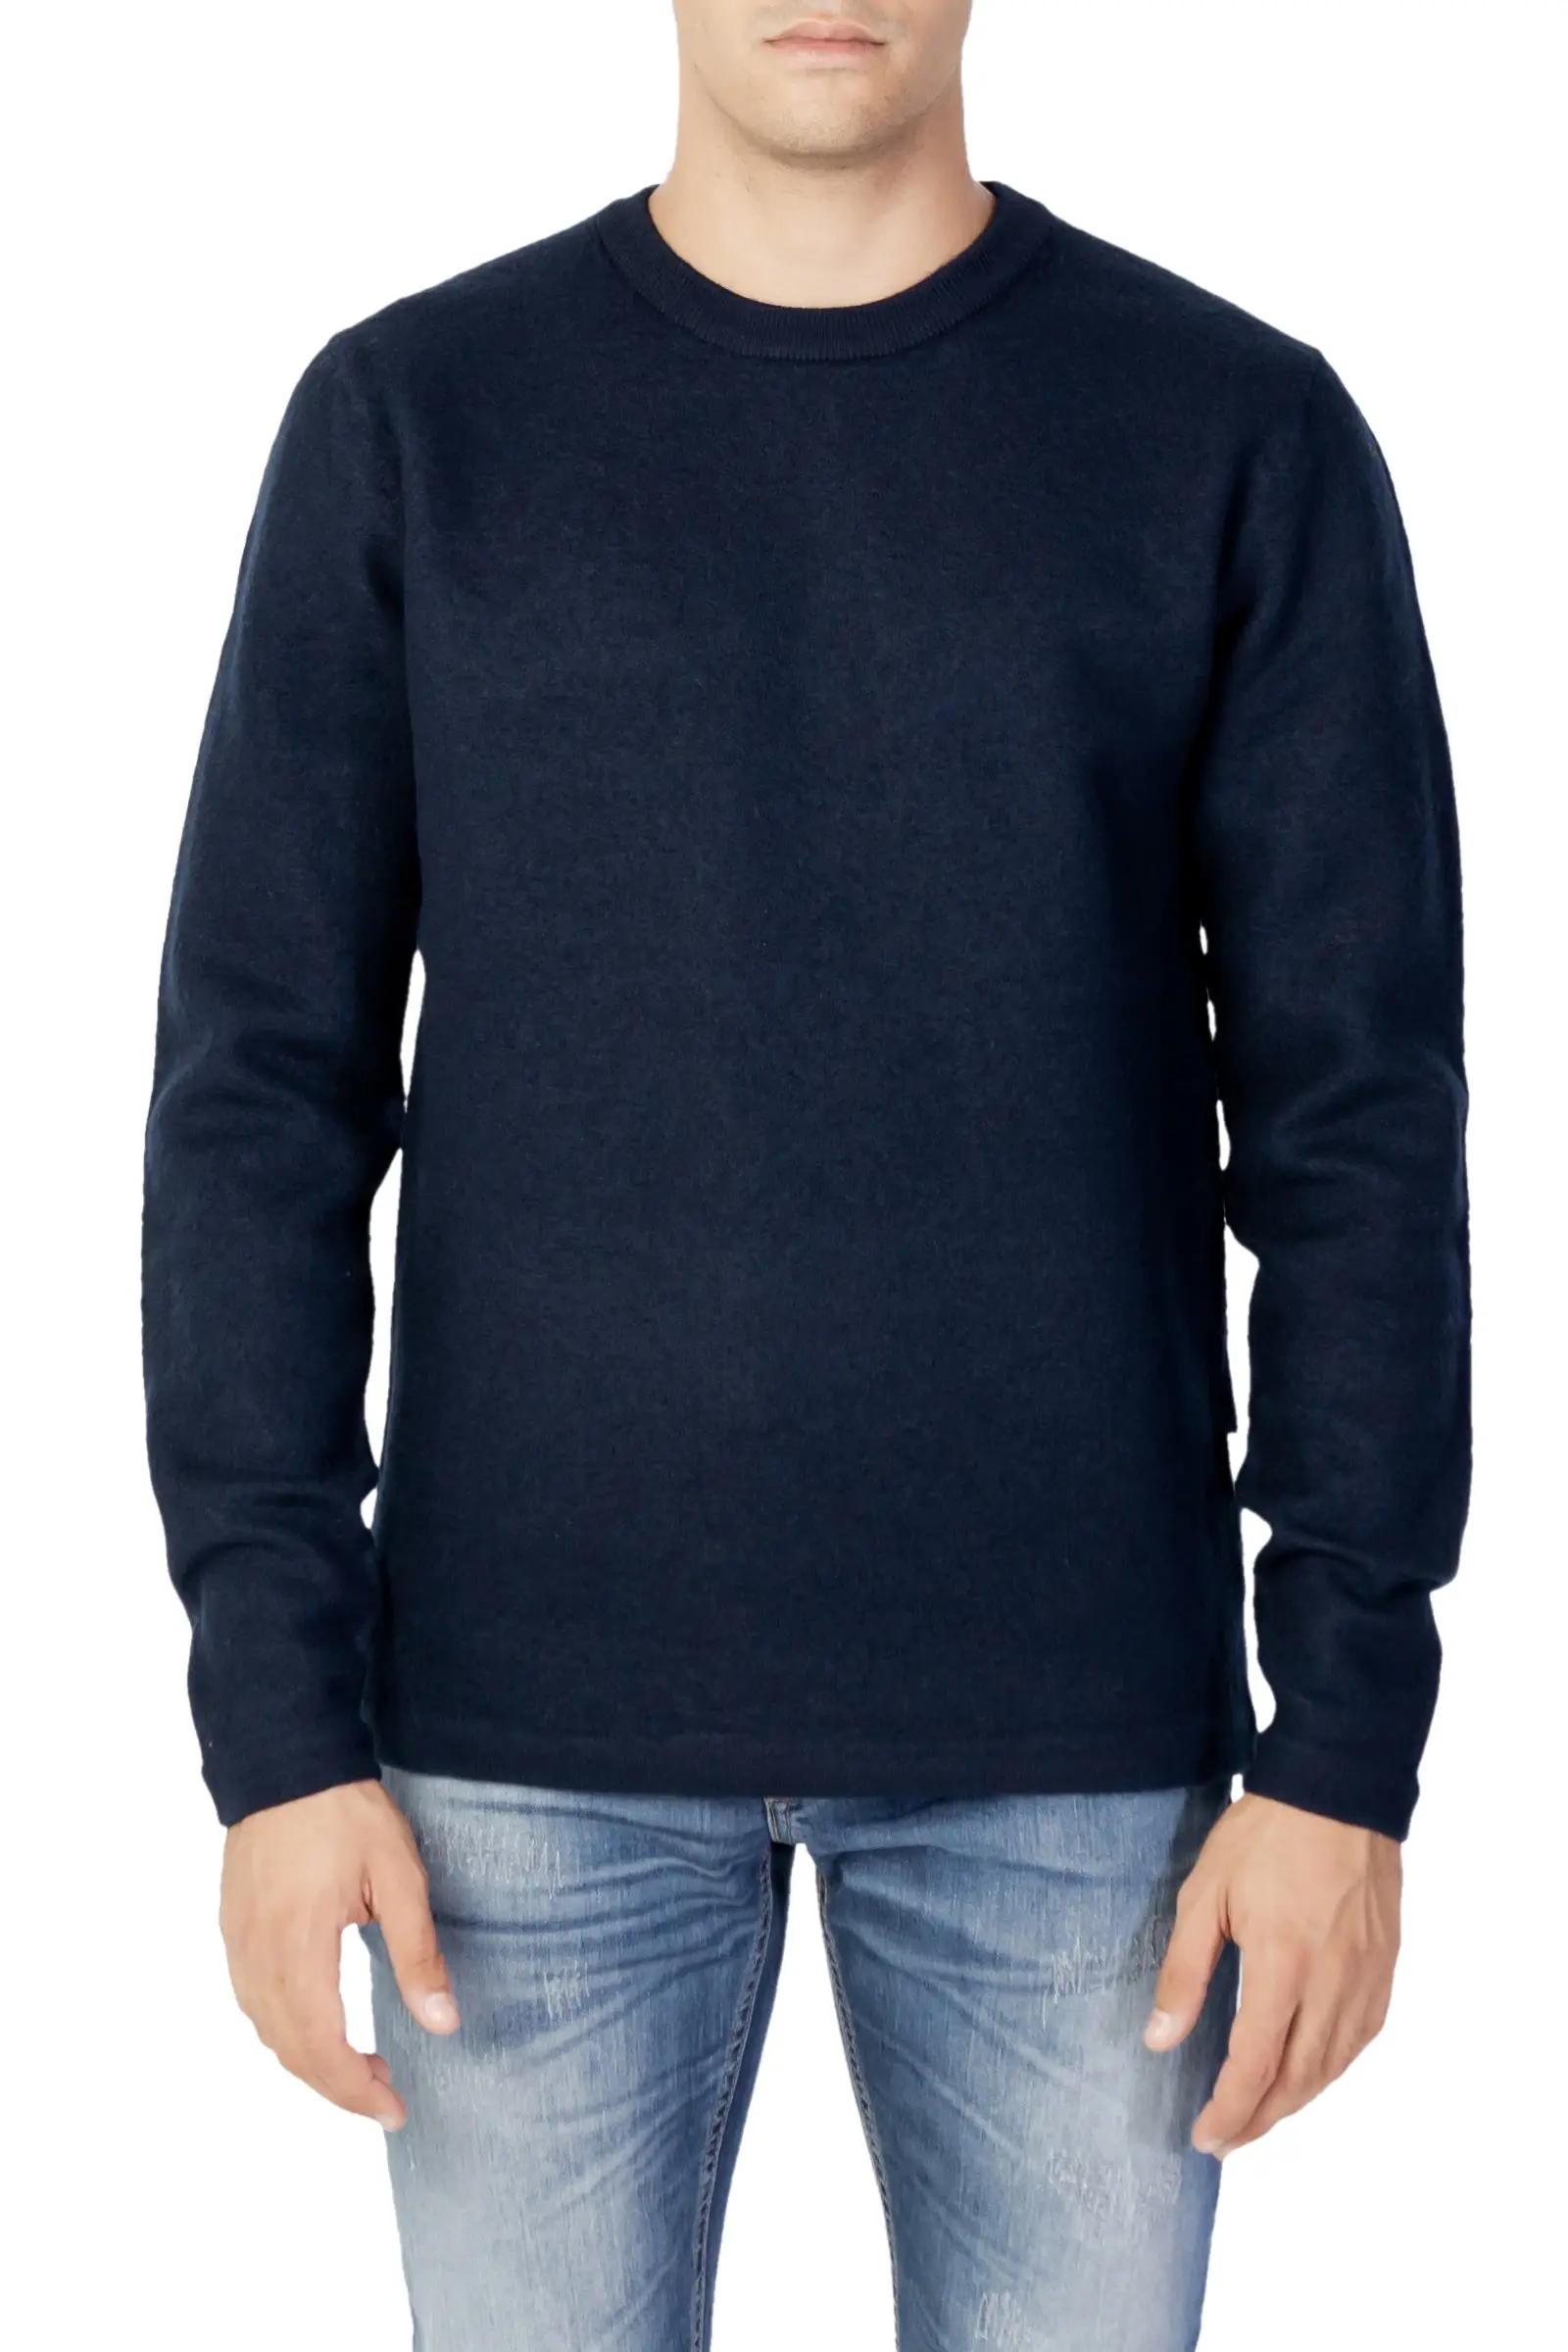 Image Selected Sweater Man